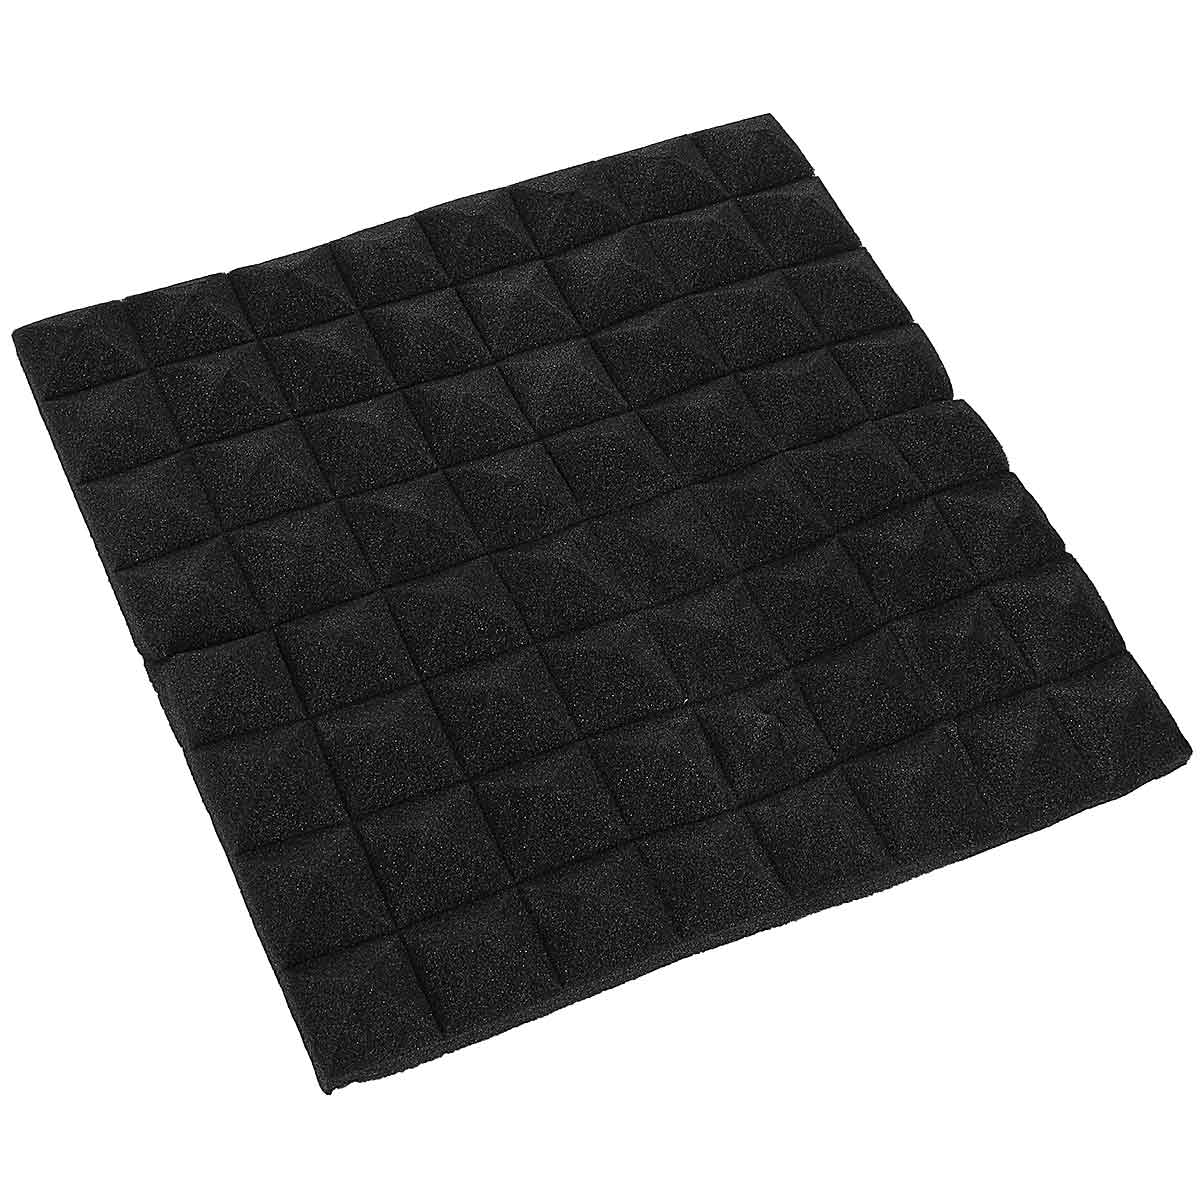 

50*50*5cm Acoustic Soundproof Sound Stop Absorption Pyramid Studio Foam Sponge Black L4B